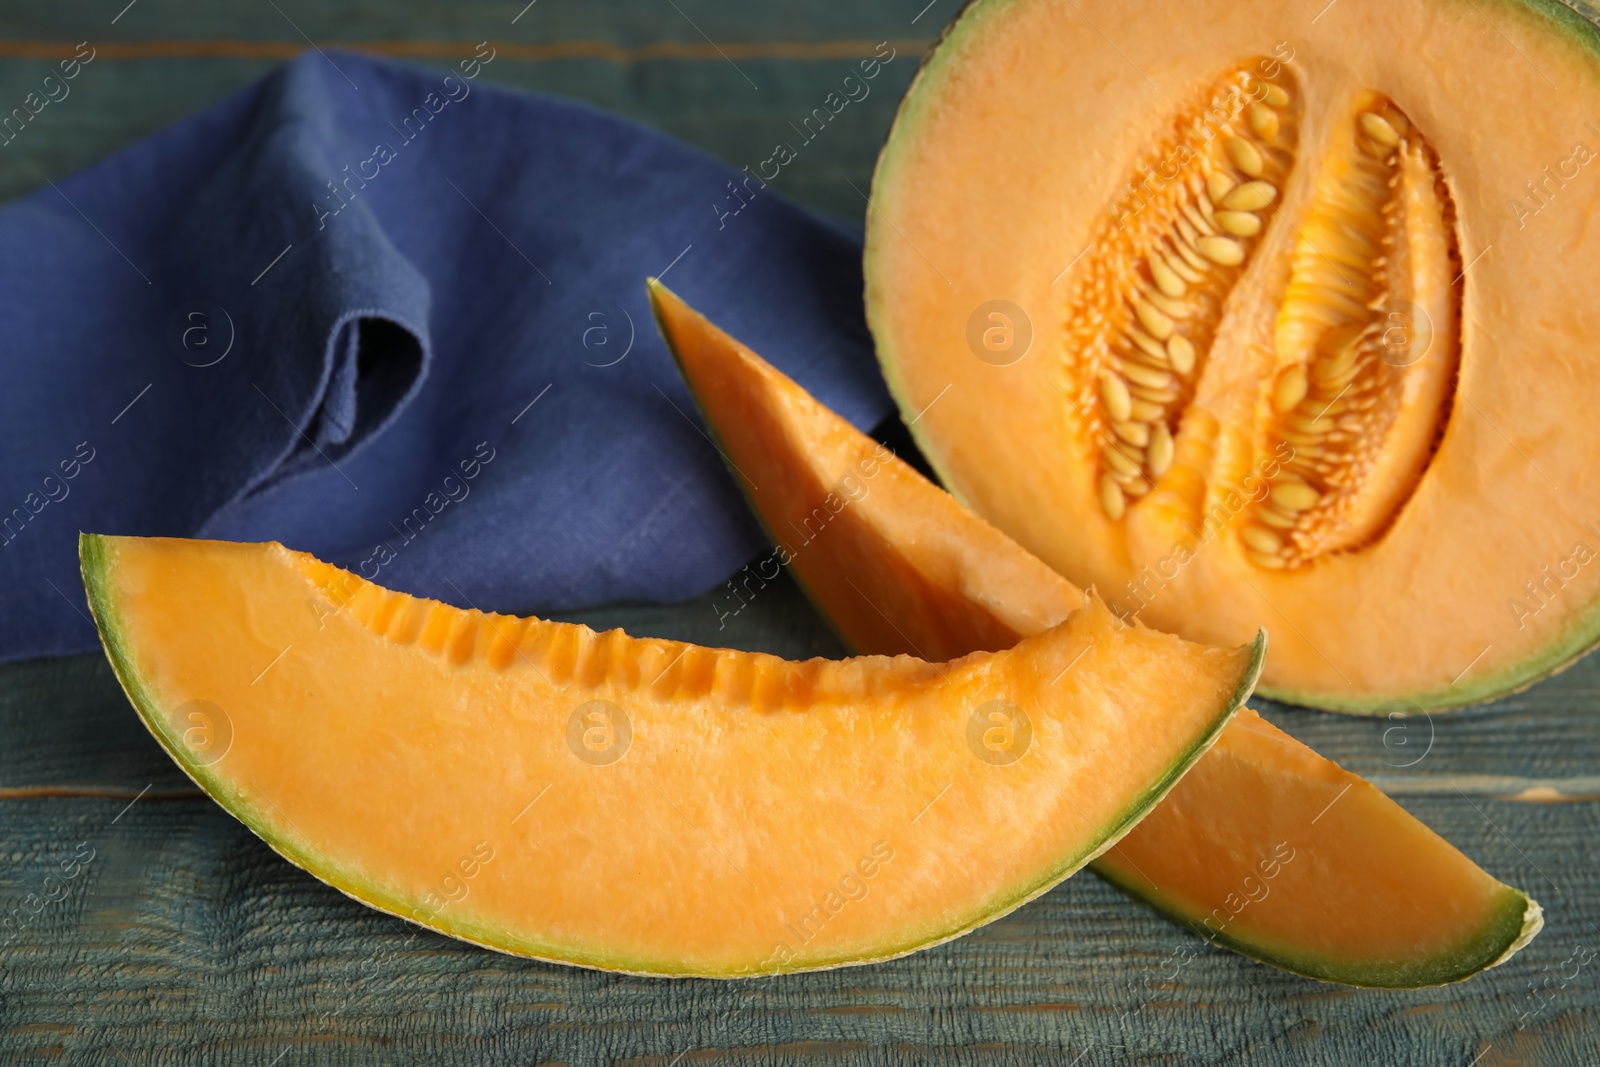 Photo of Tasty fresh cut melon on light blue wooden table, closeup